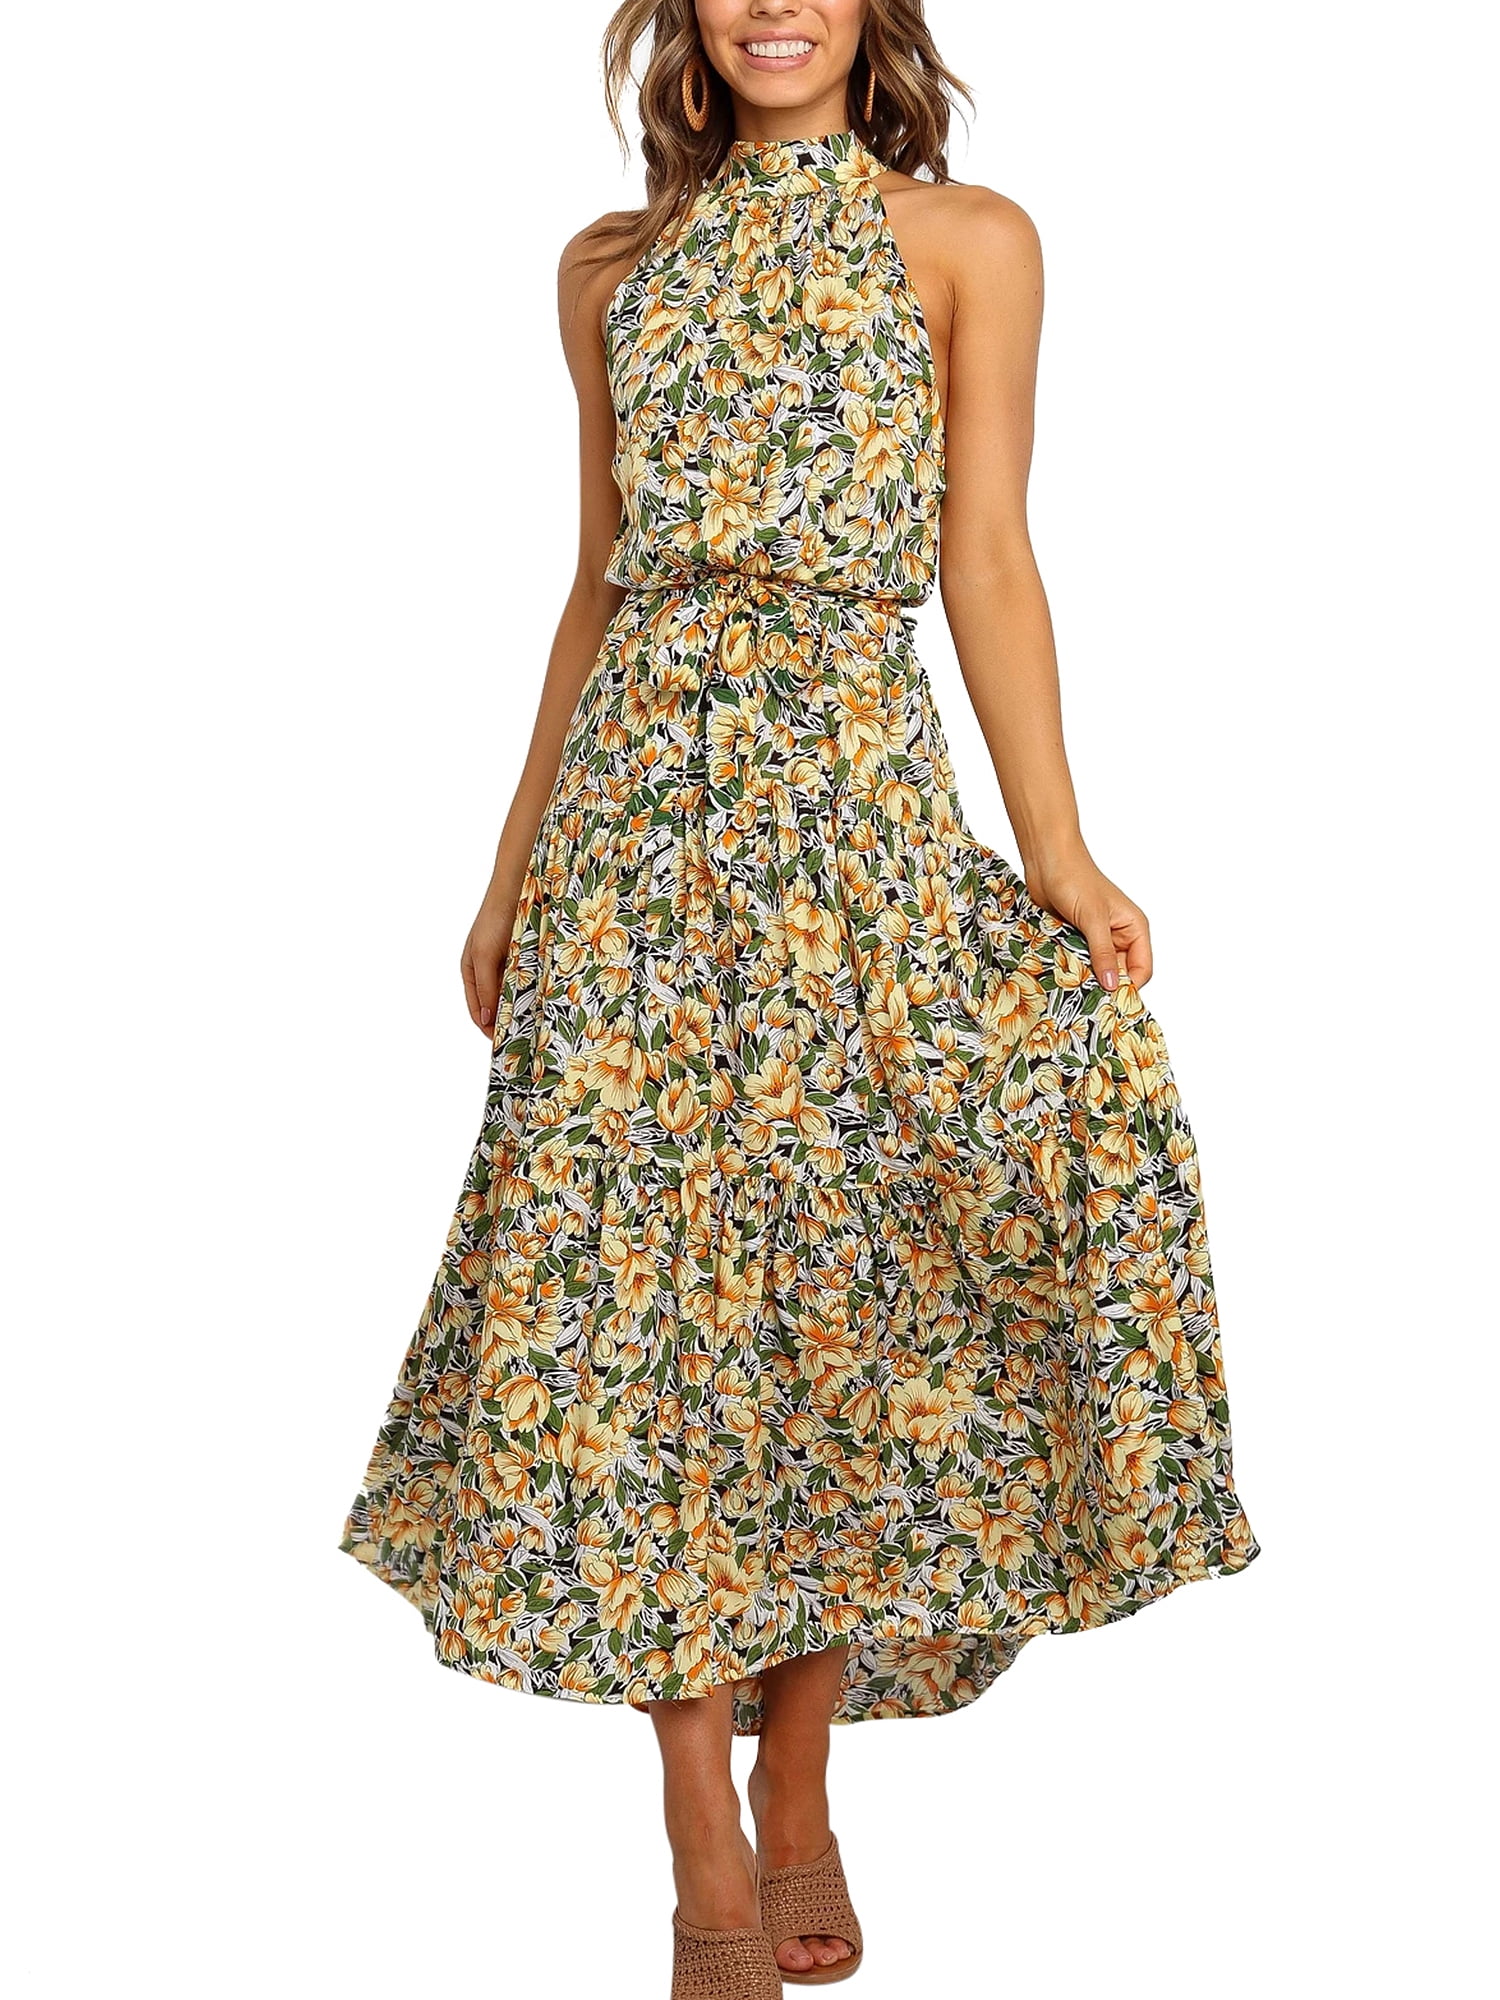 Bohemian Flower Dresses for Women Scoop Neck Sleeveless Cotton Linen Maxi Dress Casual Summer Loose Fit Long Flowy Dress 